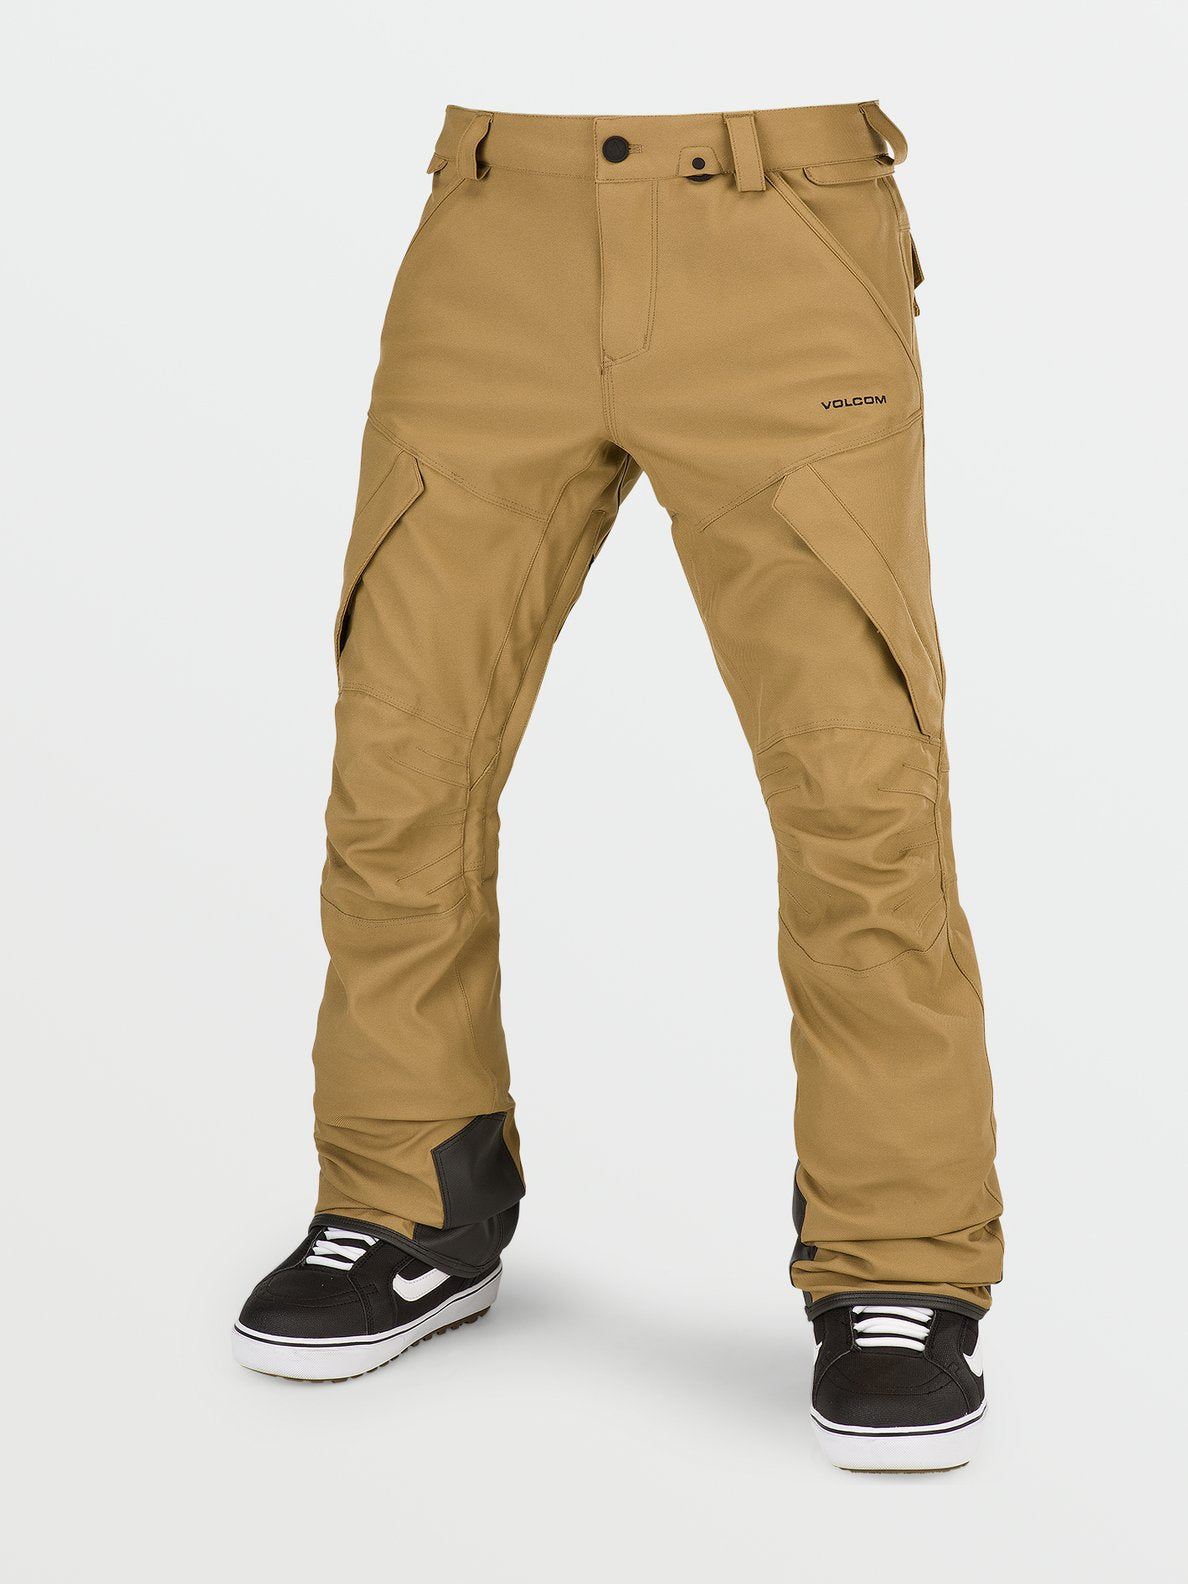 Volcom Mens New Articulated Pants - Black Burnt khaki